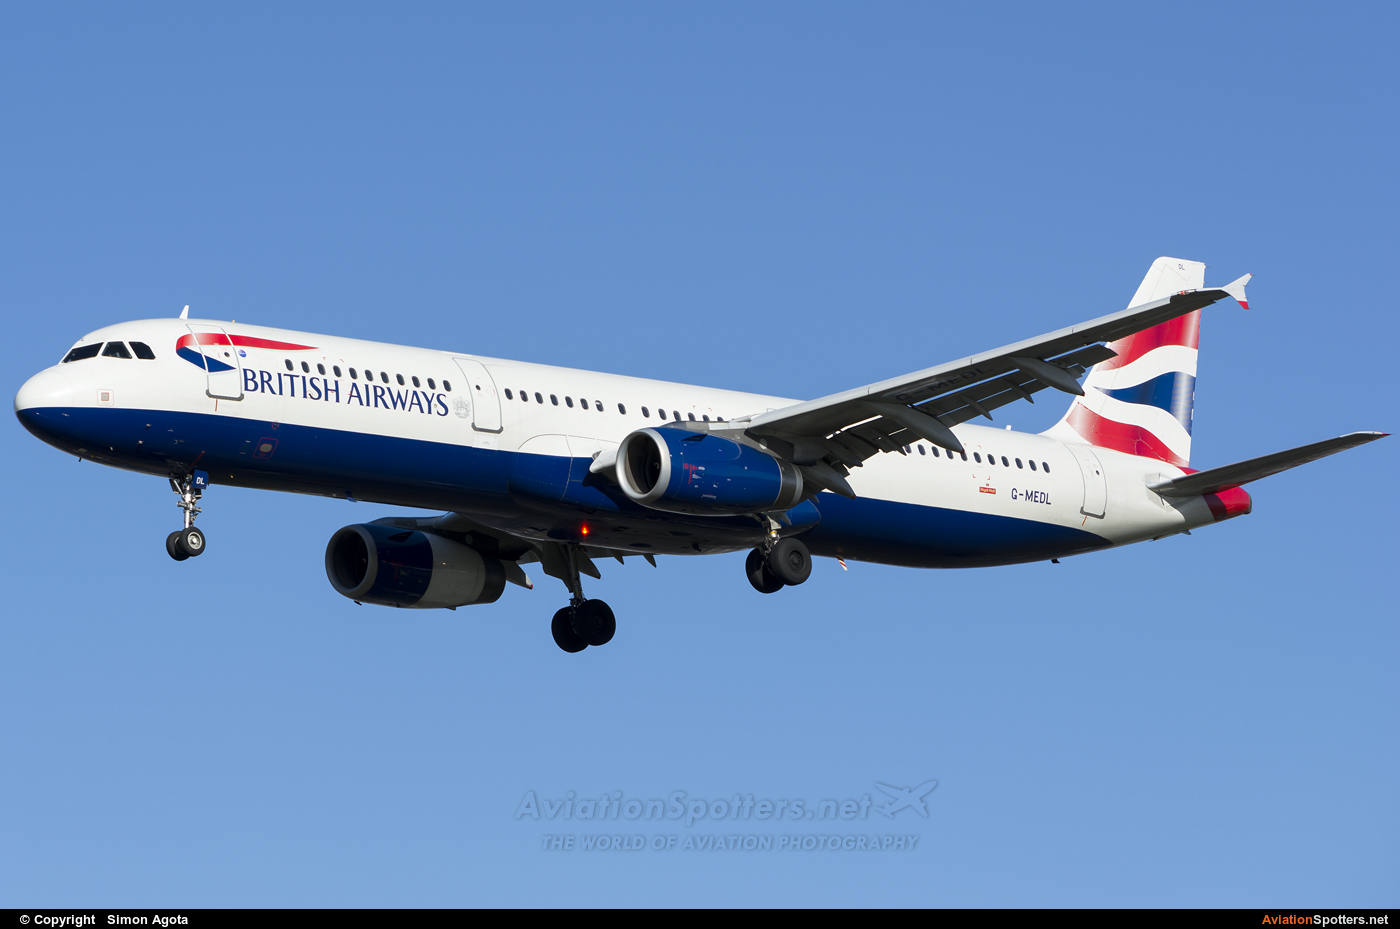 British Airways  -  A321-231  (G-MEDL) By Simon Agota (goti80)